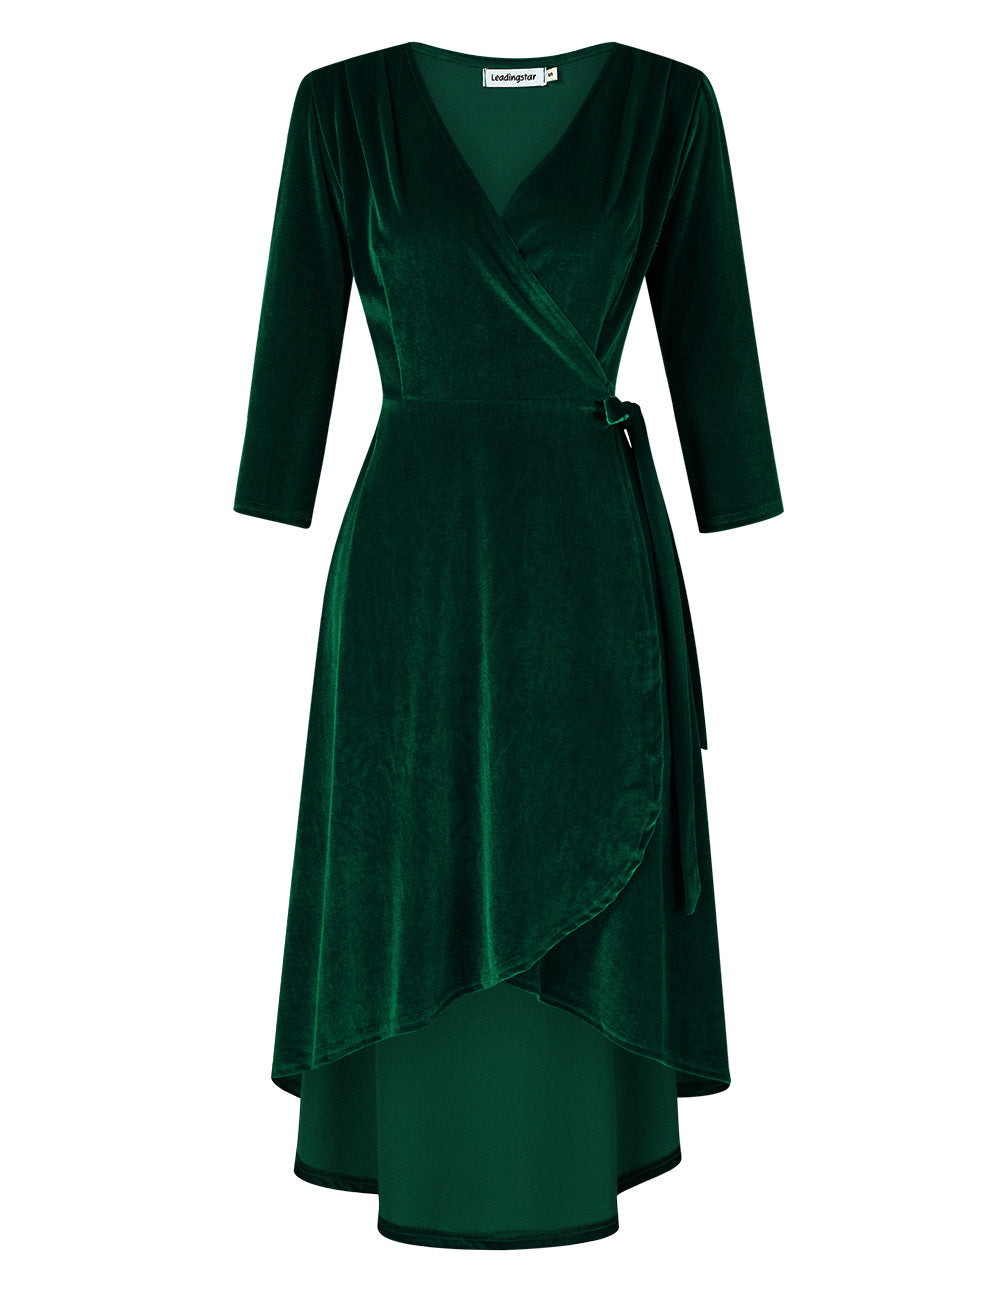 YESFASHION Women's Velvet V-Neck Long Sleeve Casual Party Dress Green